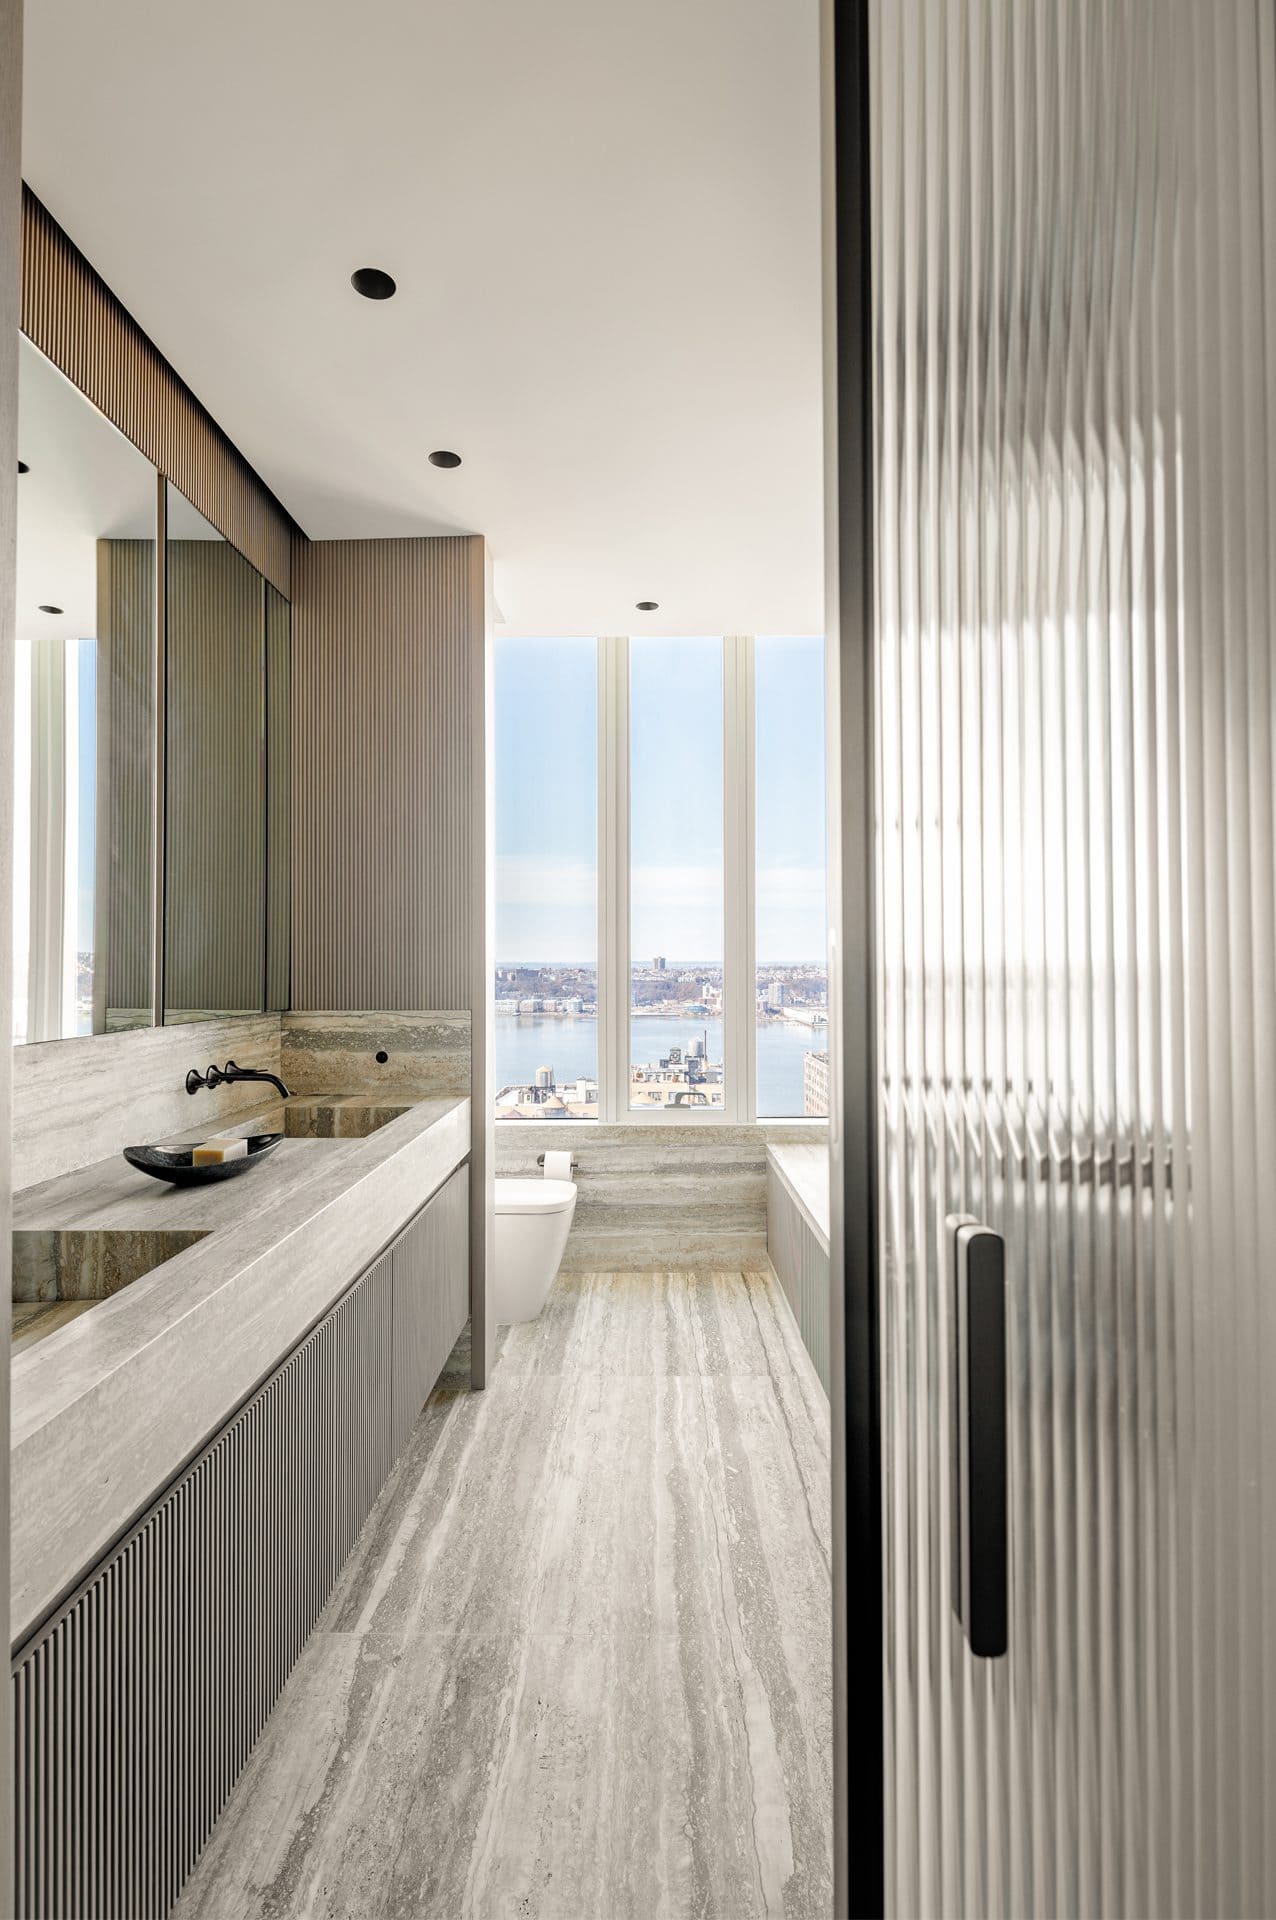 Earth-toned bathroom with Bilotta double sink vanity, pocket glass door half open and view of the Hudson River